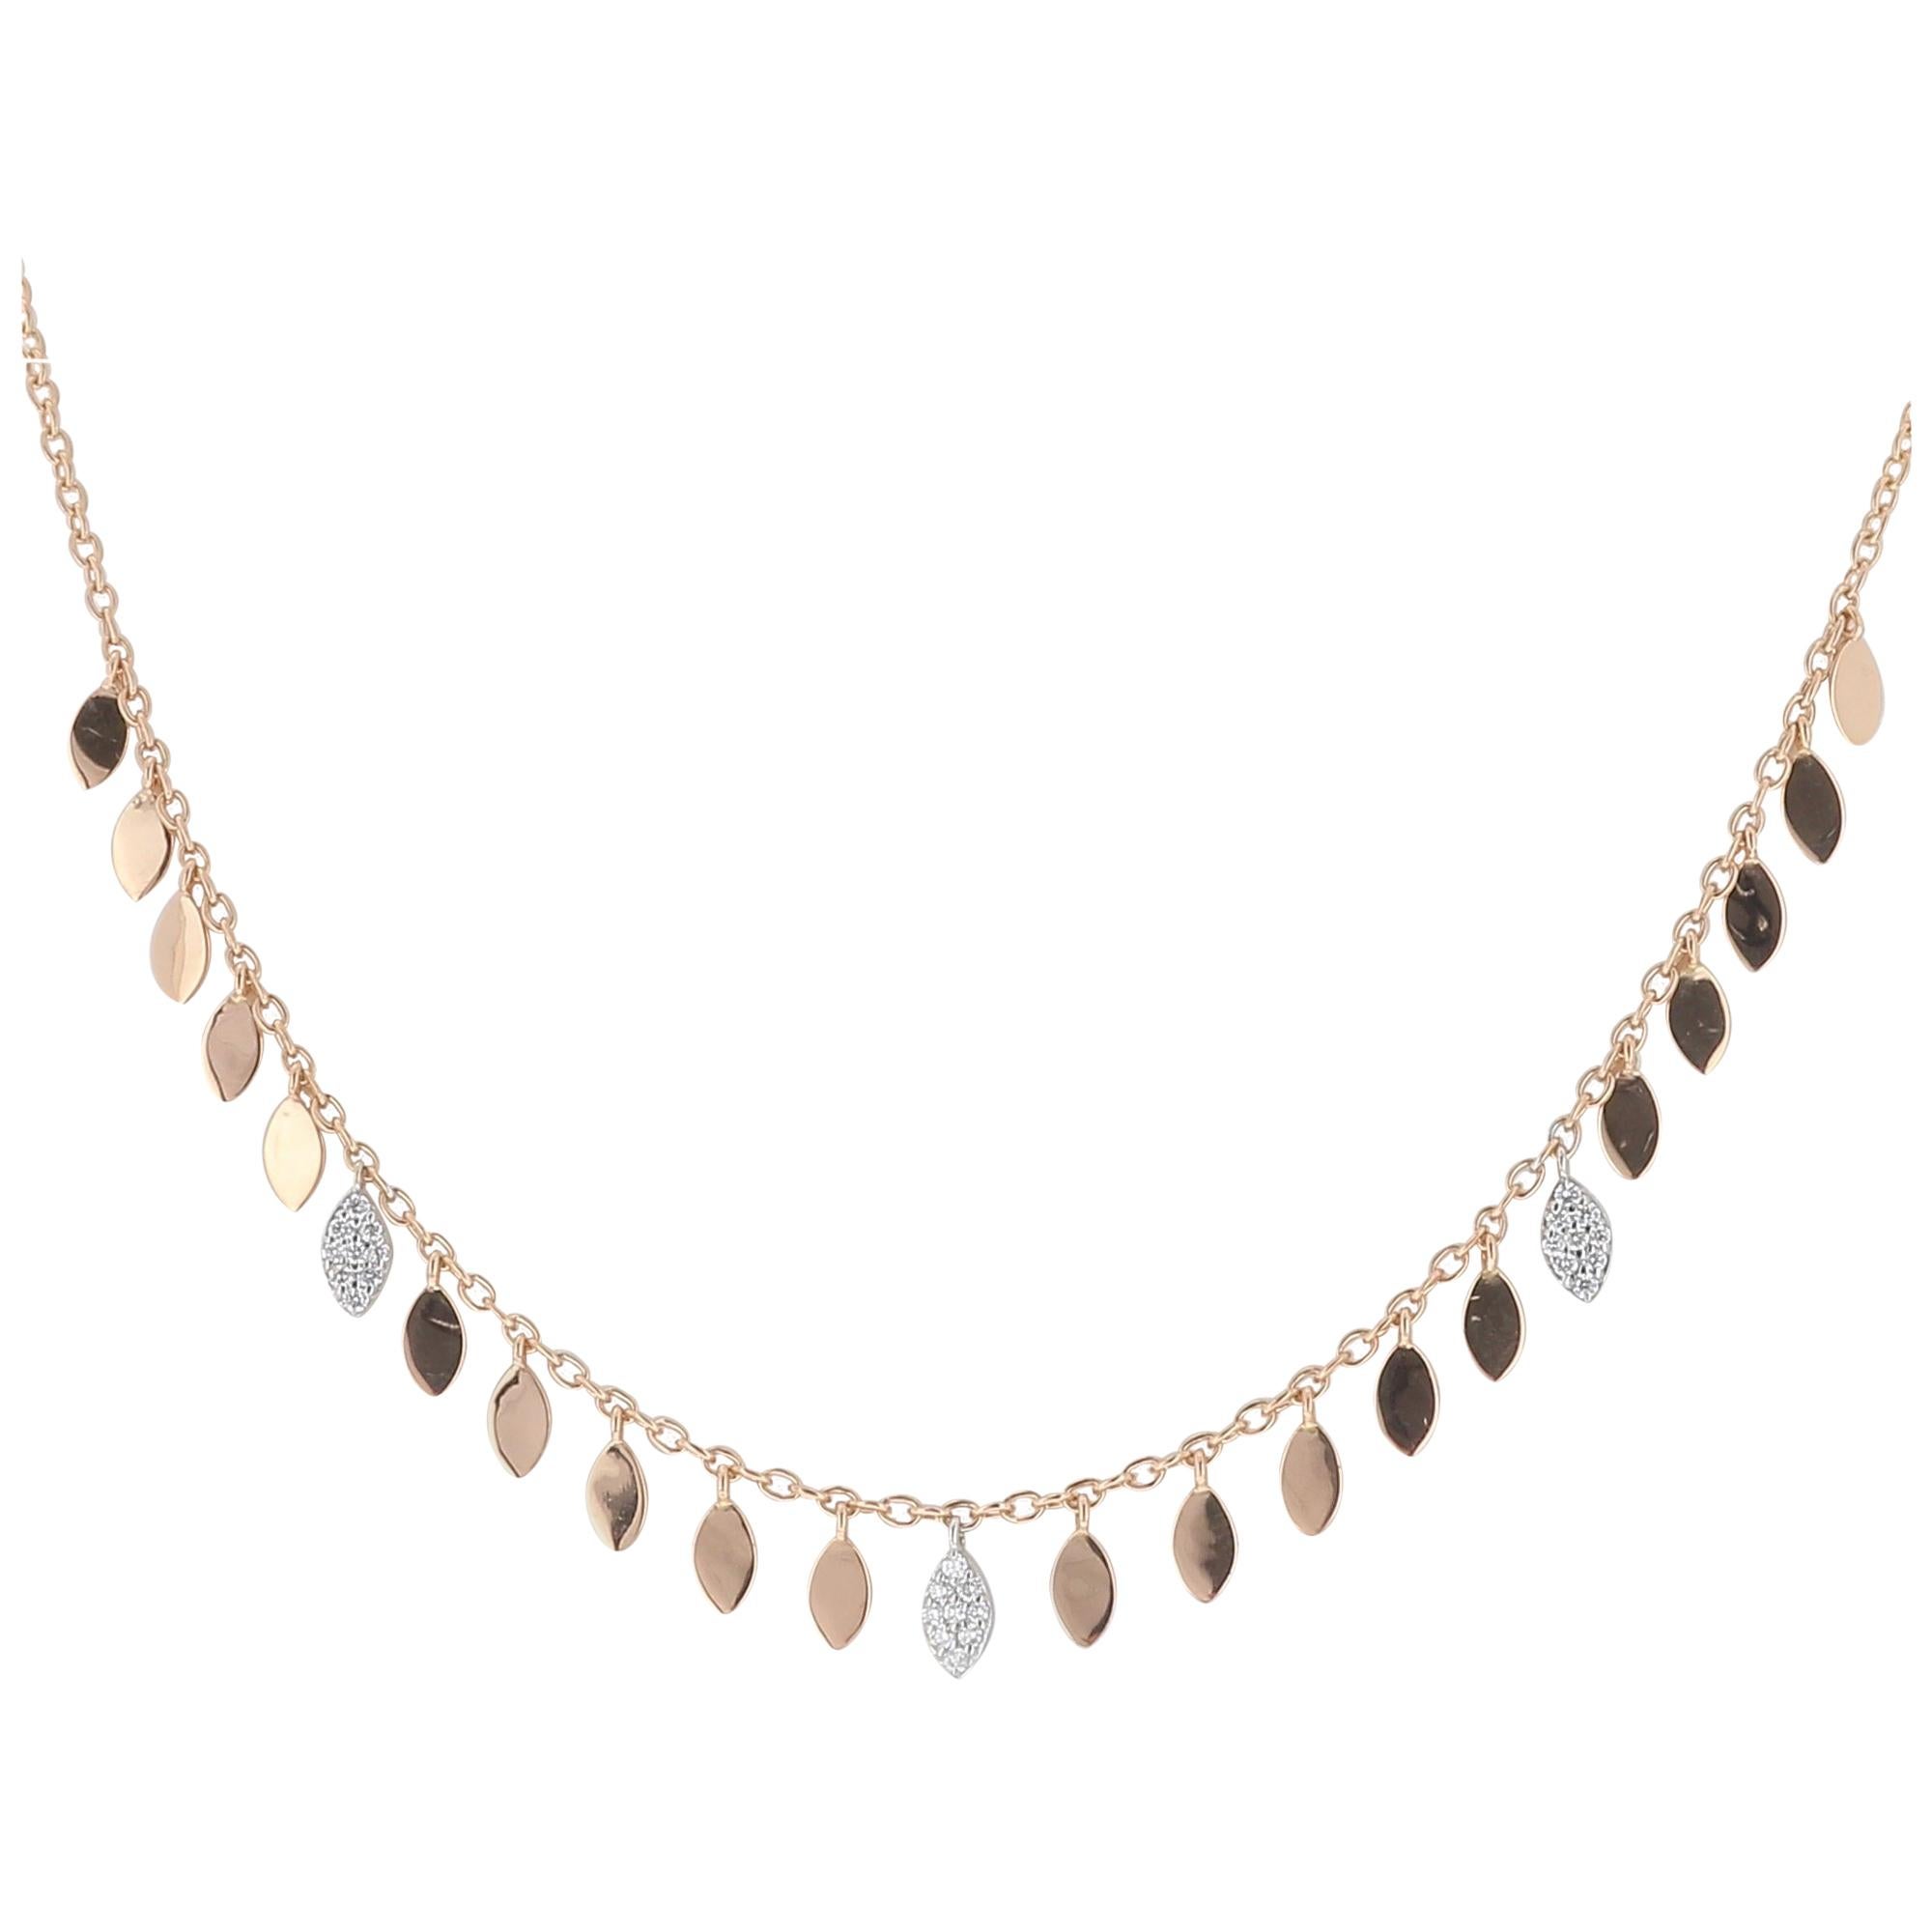 GVS 0.16 Carat Round Diamond Chocker Necklace 18 Karat Gold Héritage Jewelry For Sale